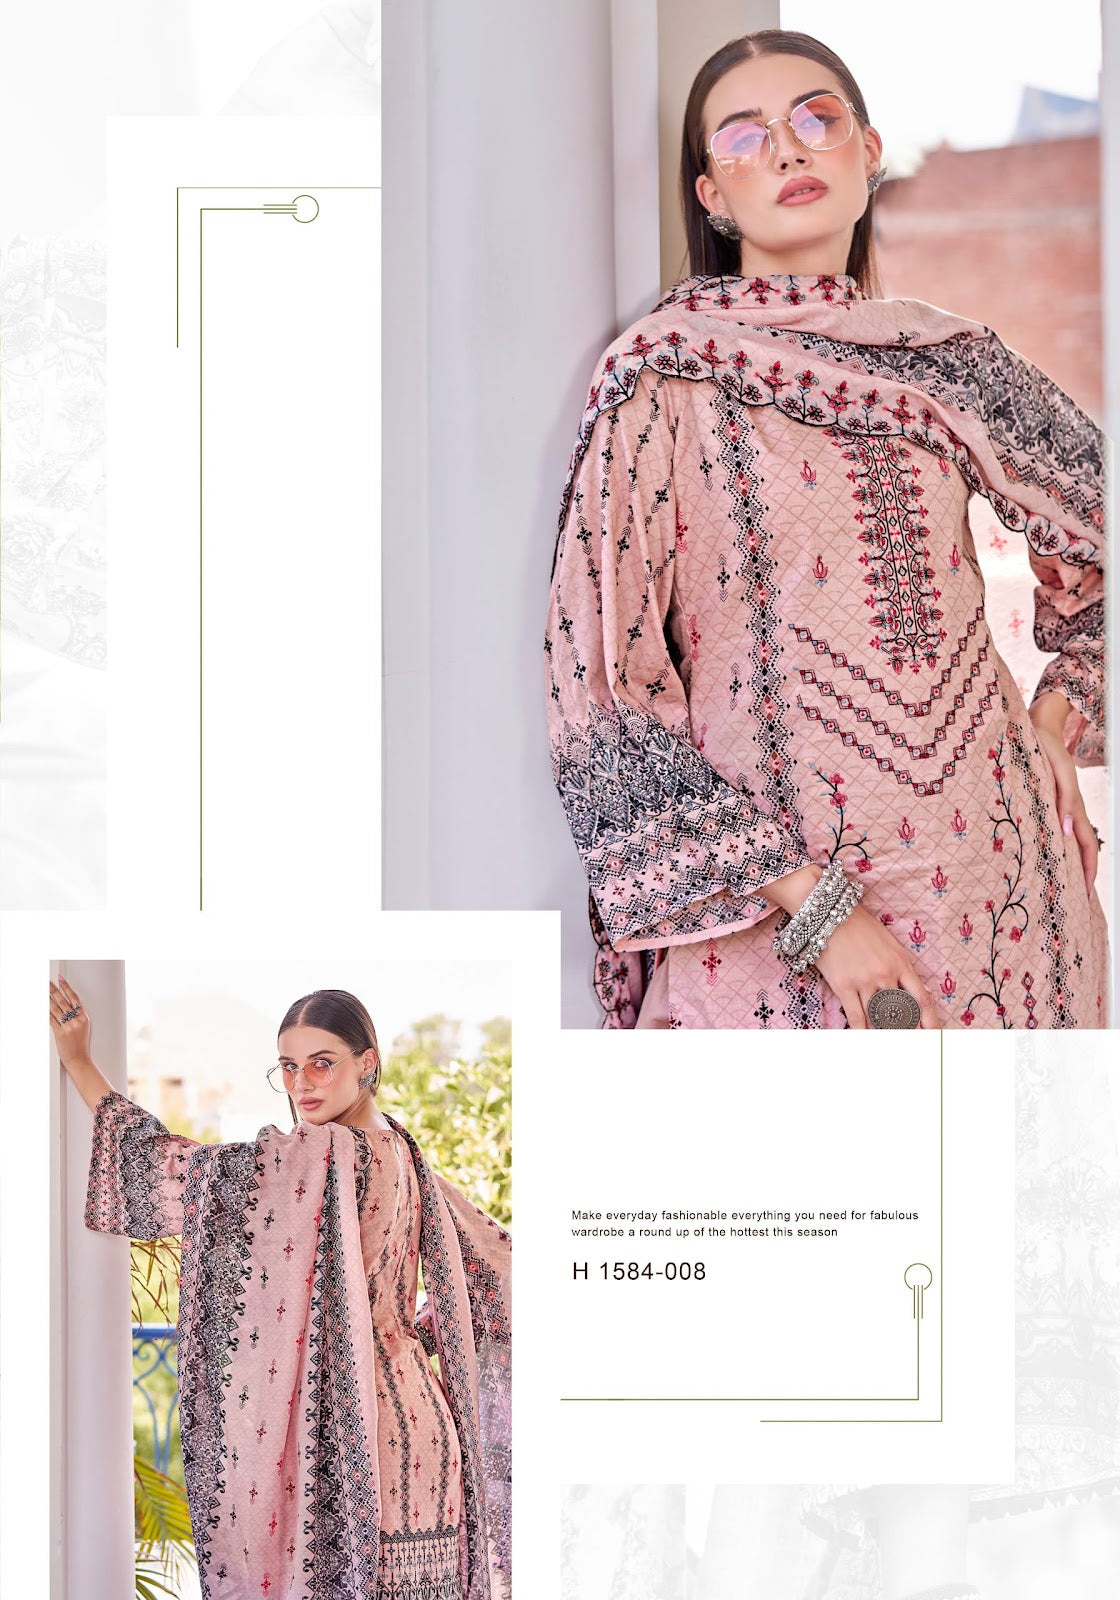 Bin Saeed Edition 2 Alok Cambric Cotton Karachi Salwar Suits Wholesaler Ahmedabad